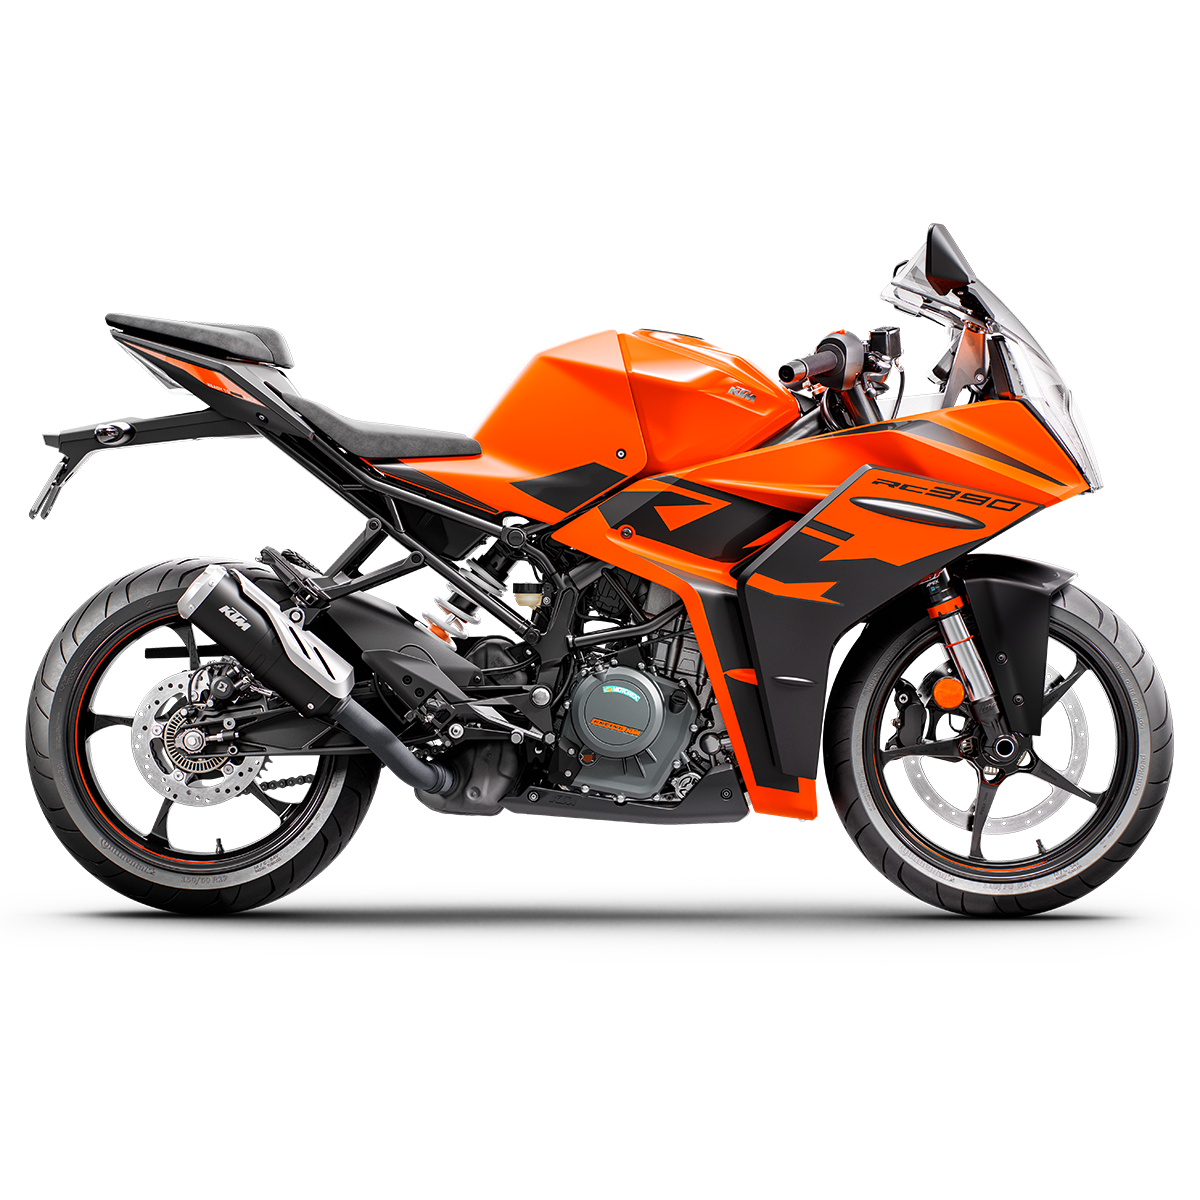 Gafas KTM Racing Googles Orange 2022